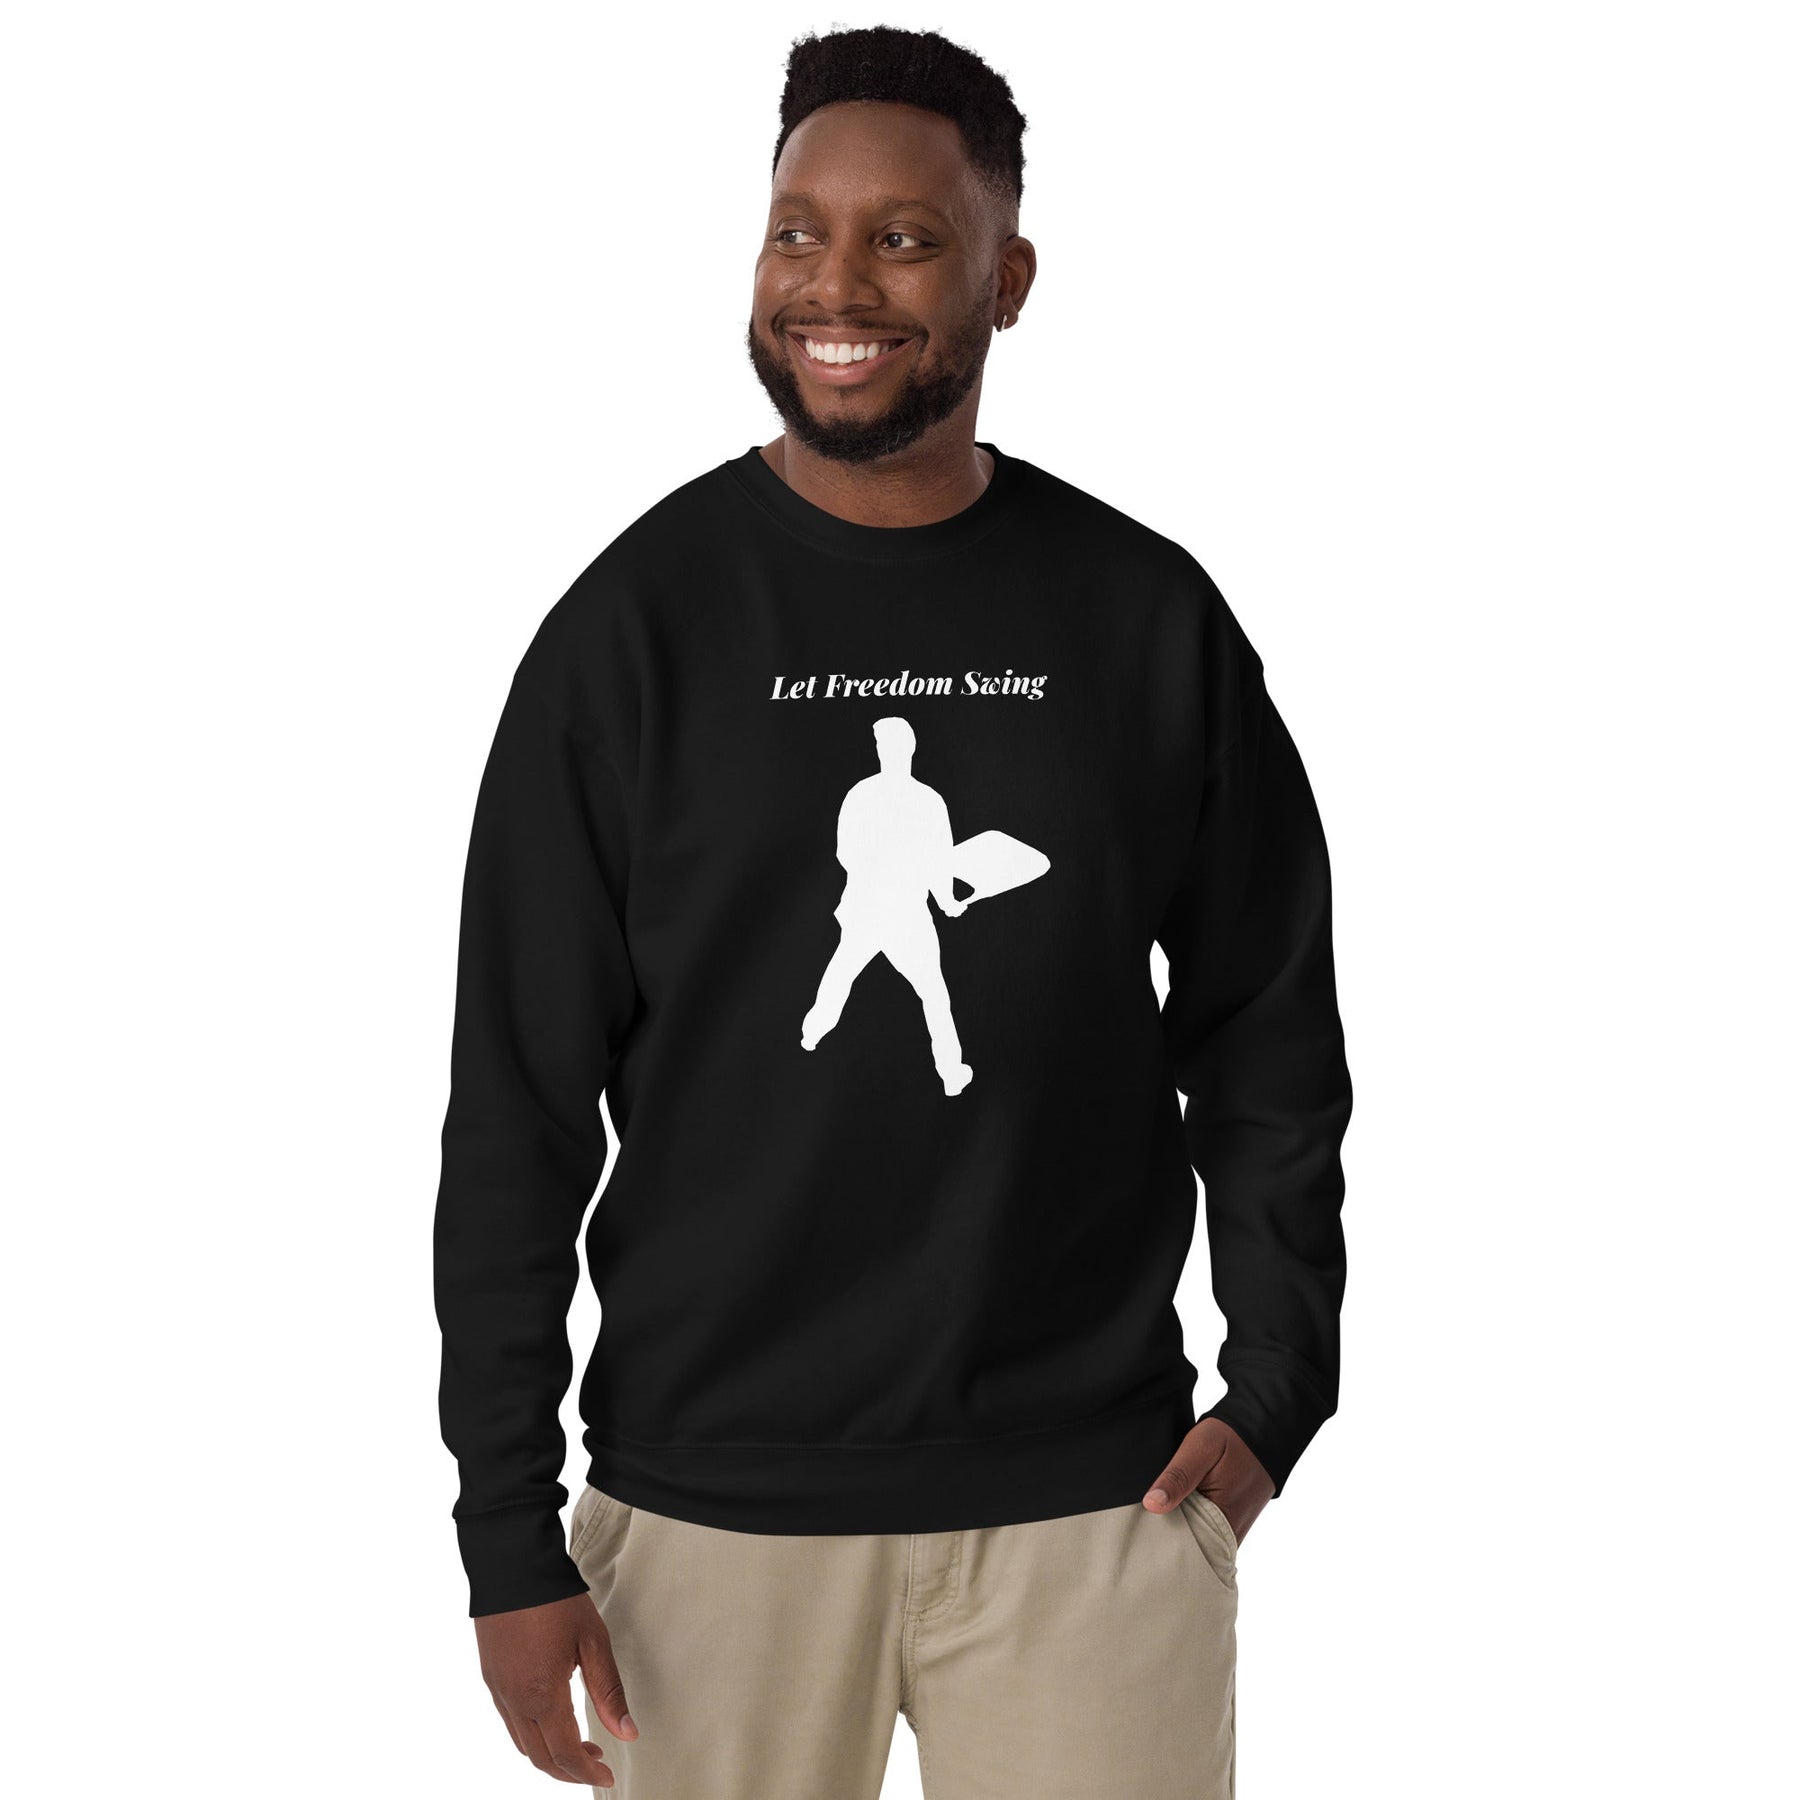 Let Freedom Swing Unisex Premium Sweatshirt